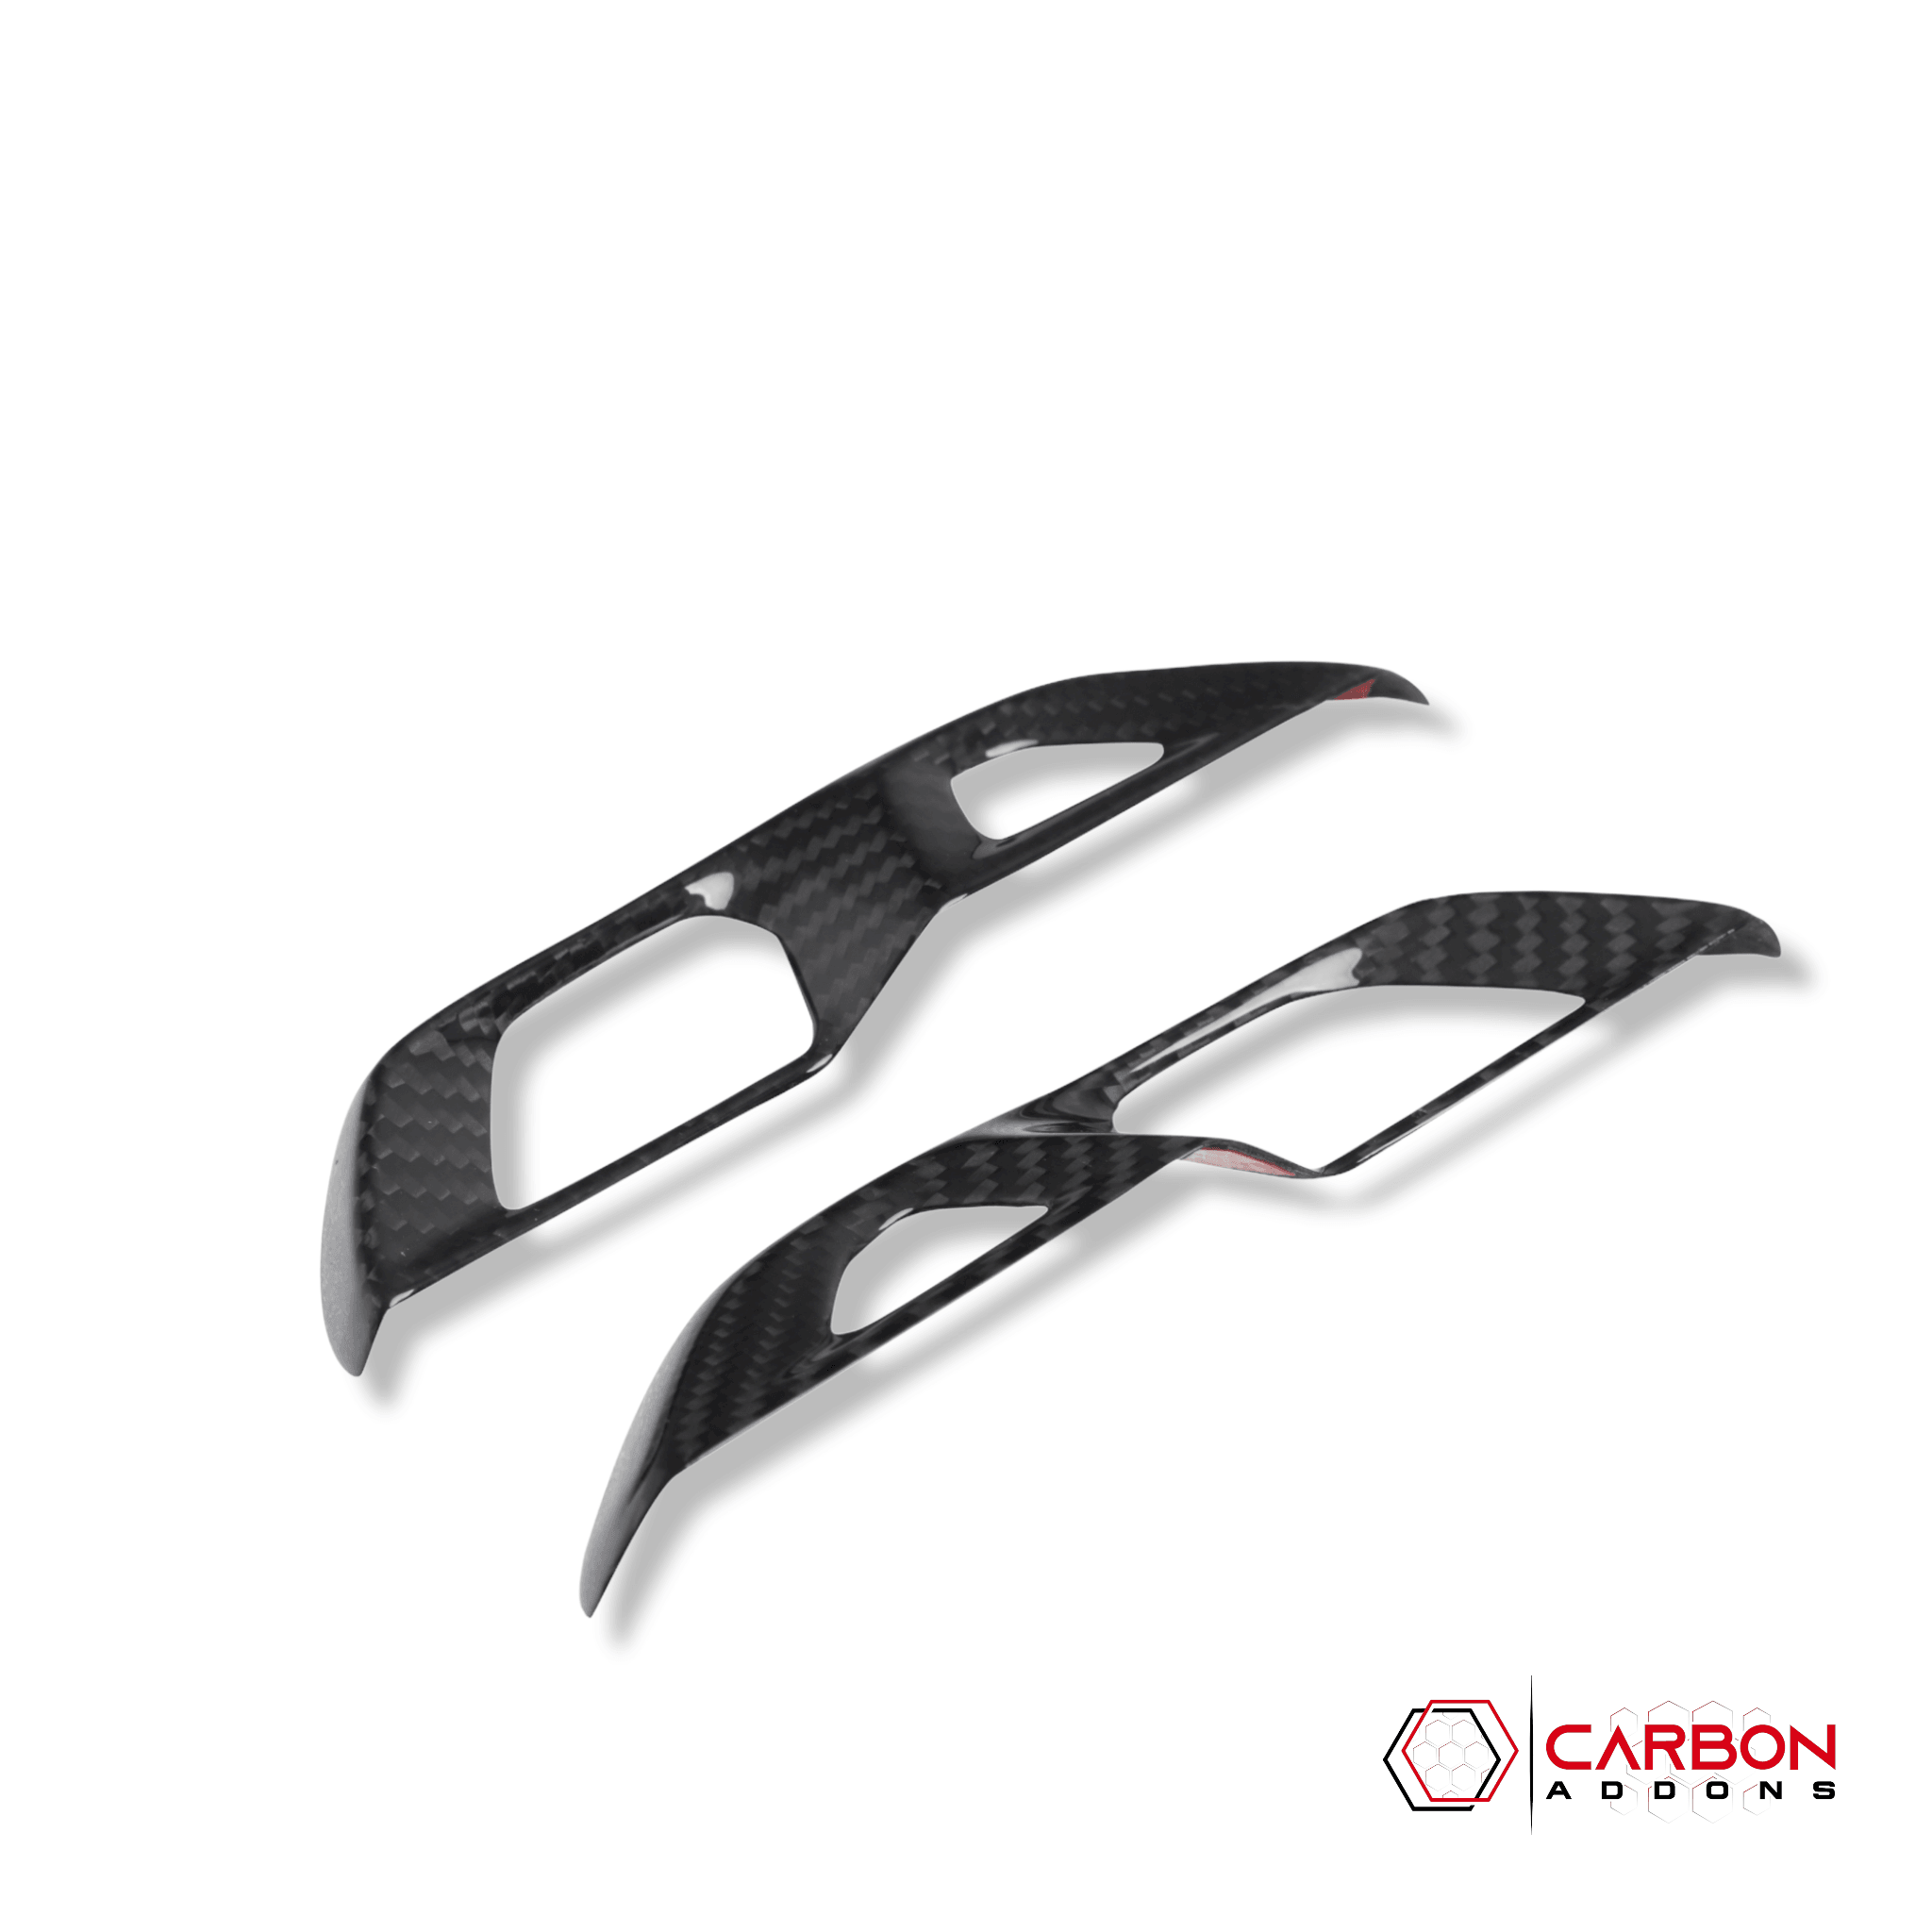 [Set] C8 Corvette Real Carbon Fiber Lock Trim Cover - carbonaddons Carbon Fiber Parts, Accessories, Upgrades, Mods